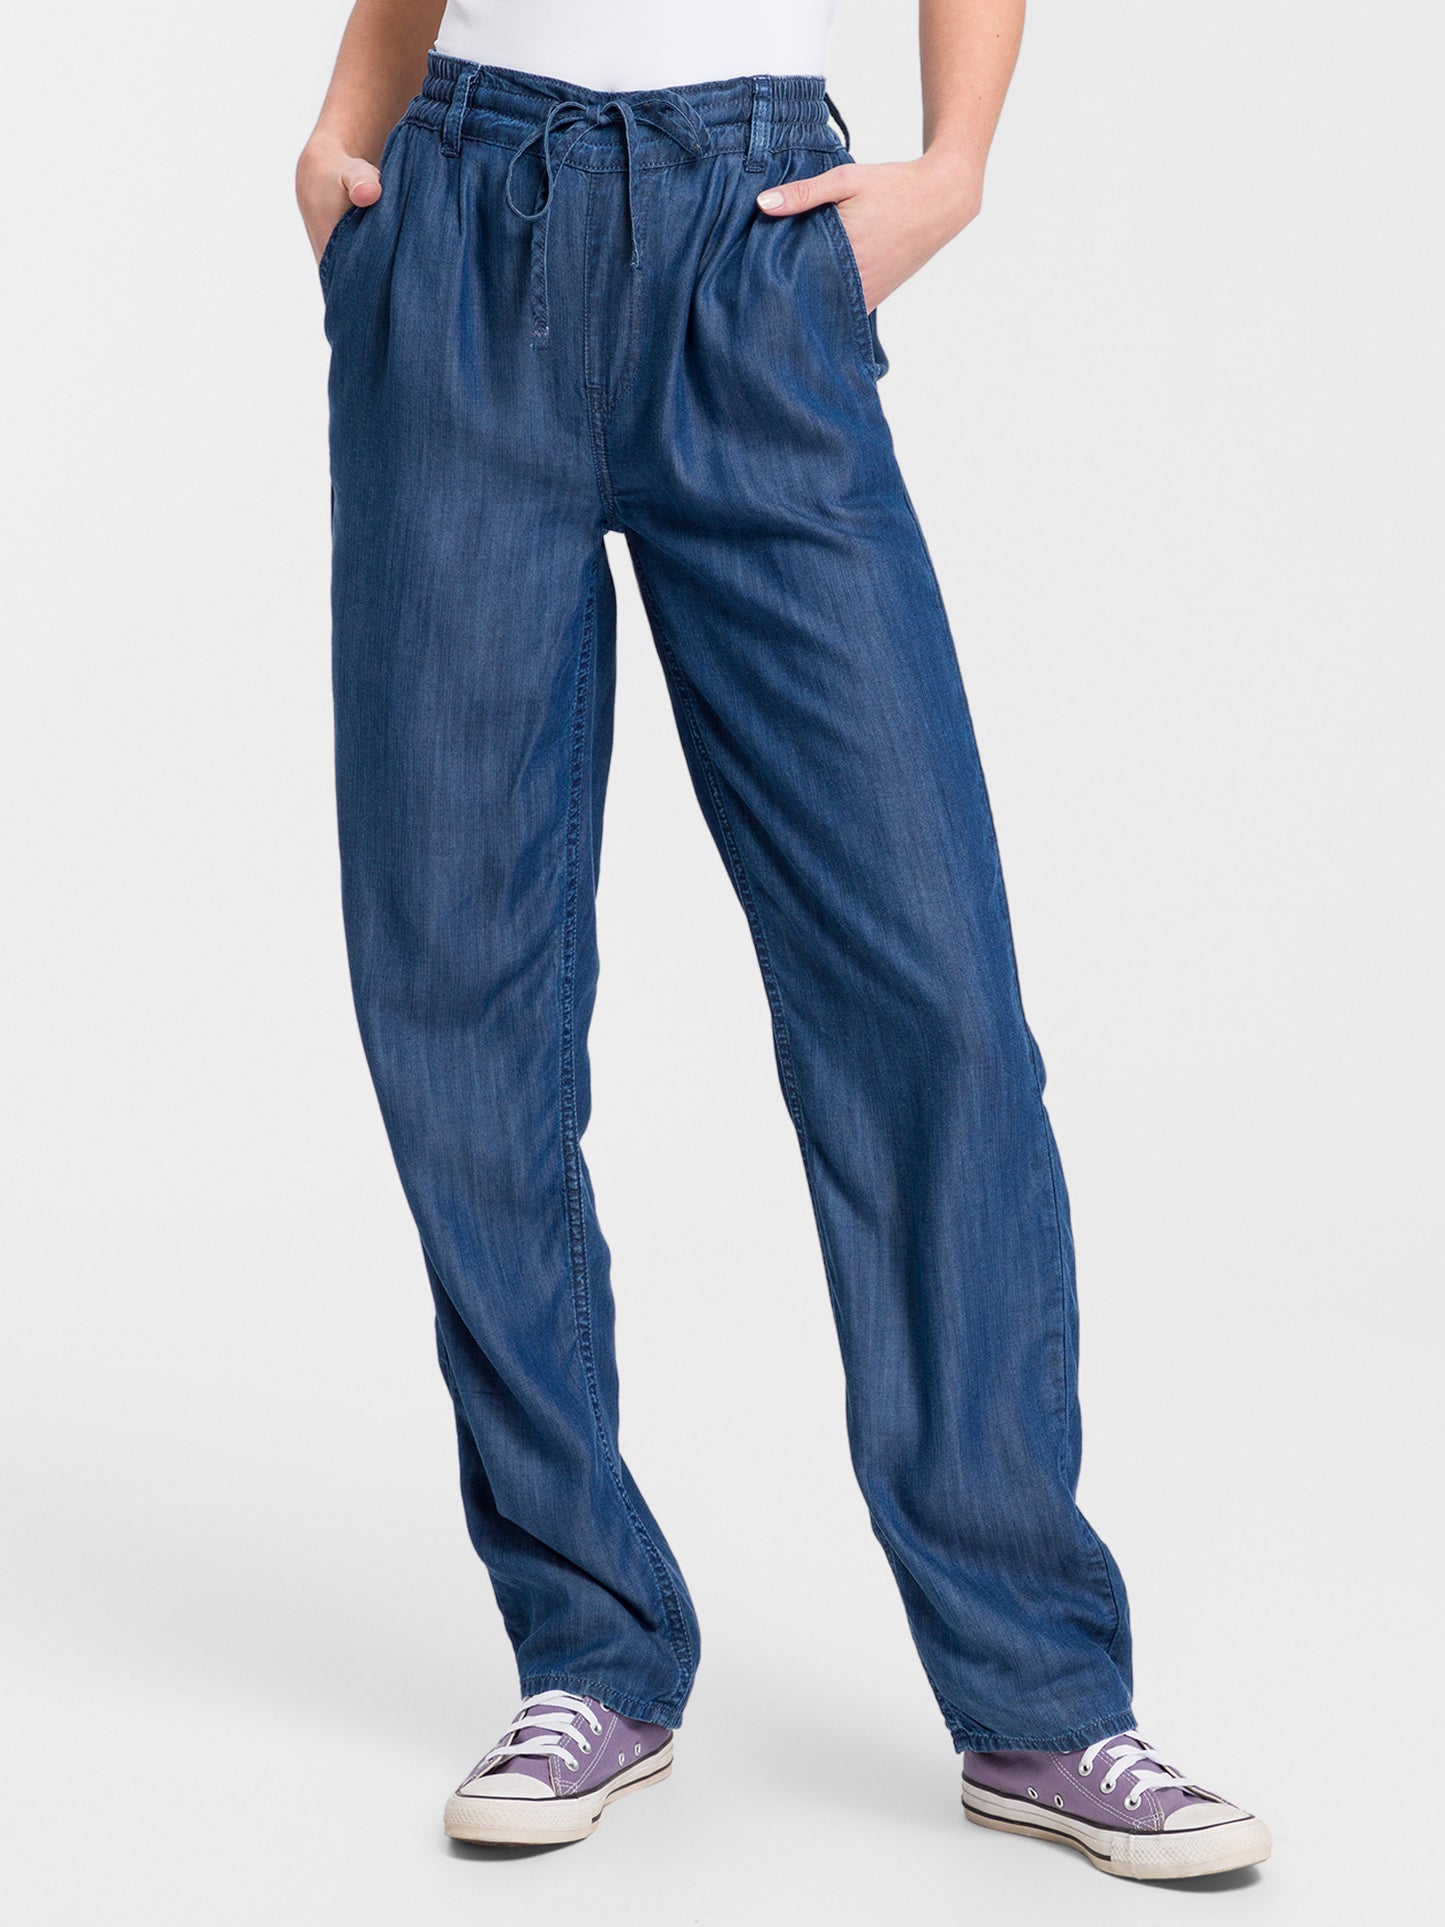 Women's jeans straight fit dark blue